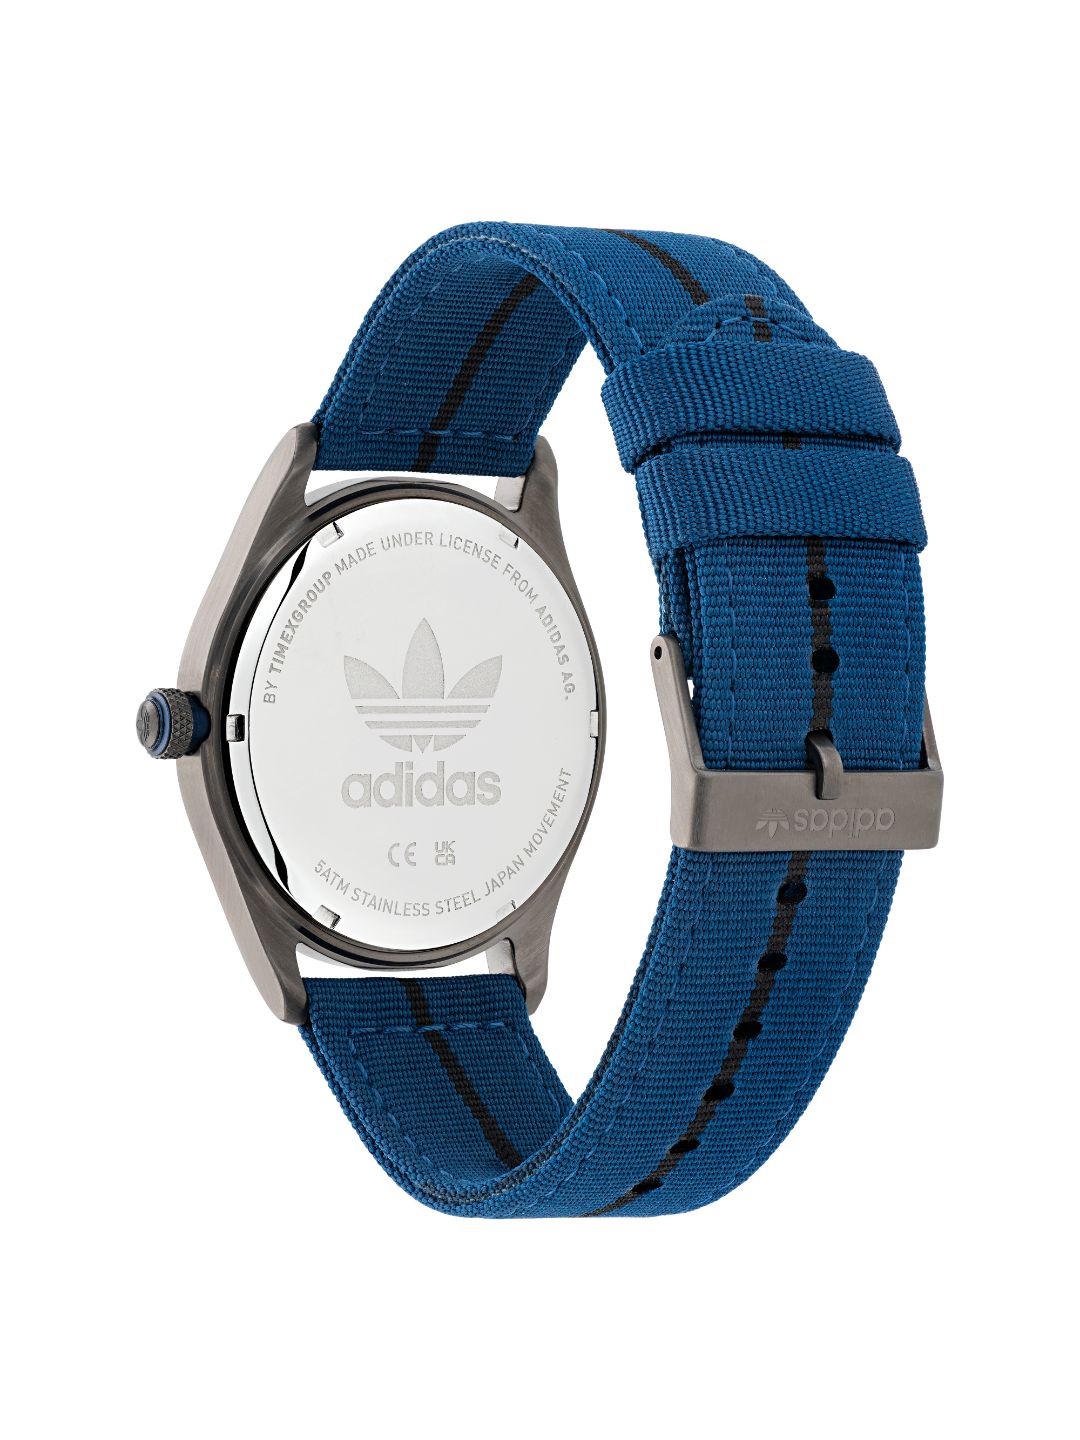 Adidas Originals Black Dial Unisex Watch - AOSY22521